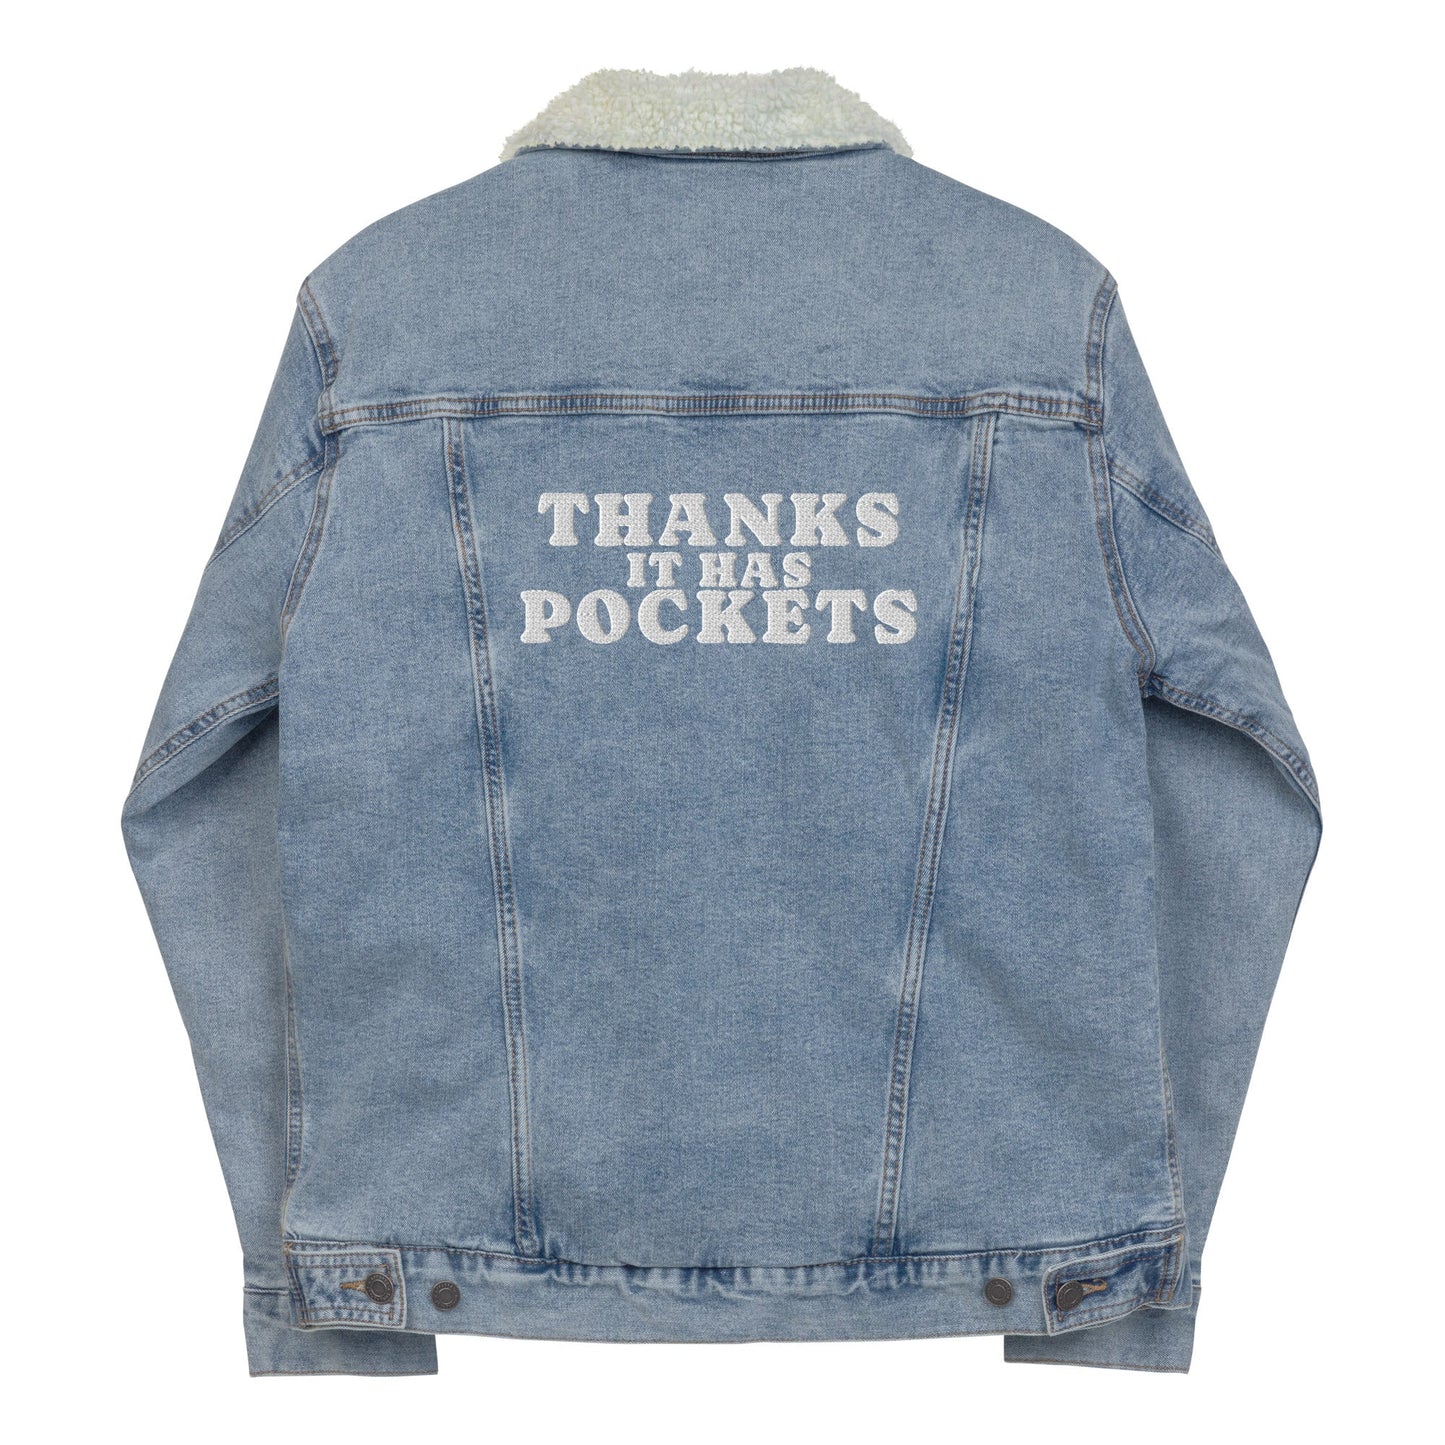 "Thanks it has pockets" denim sherpa jacket - The Nerd Supply Company